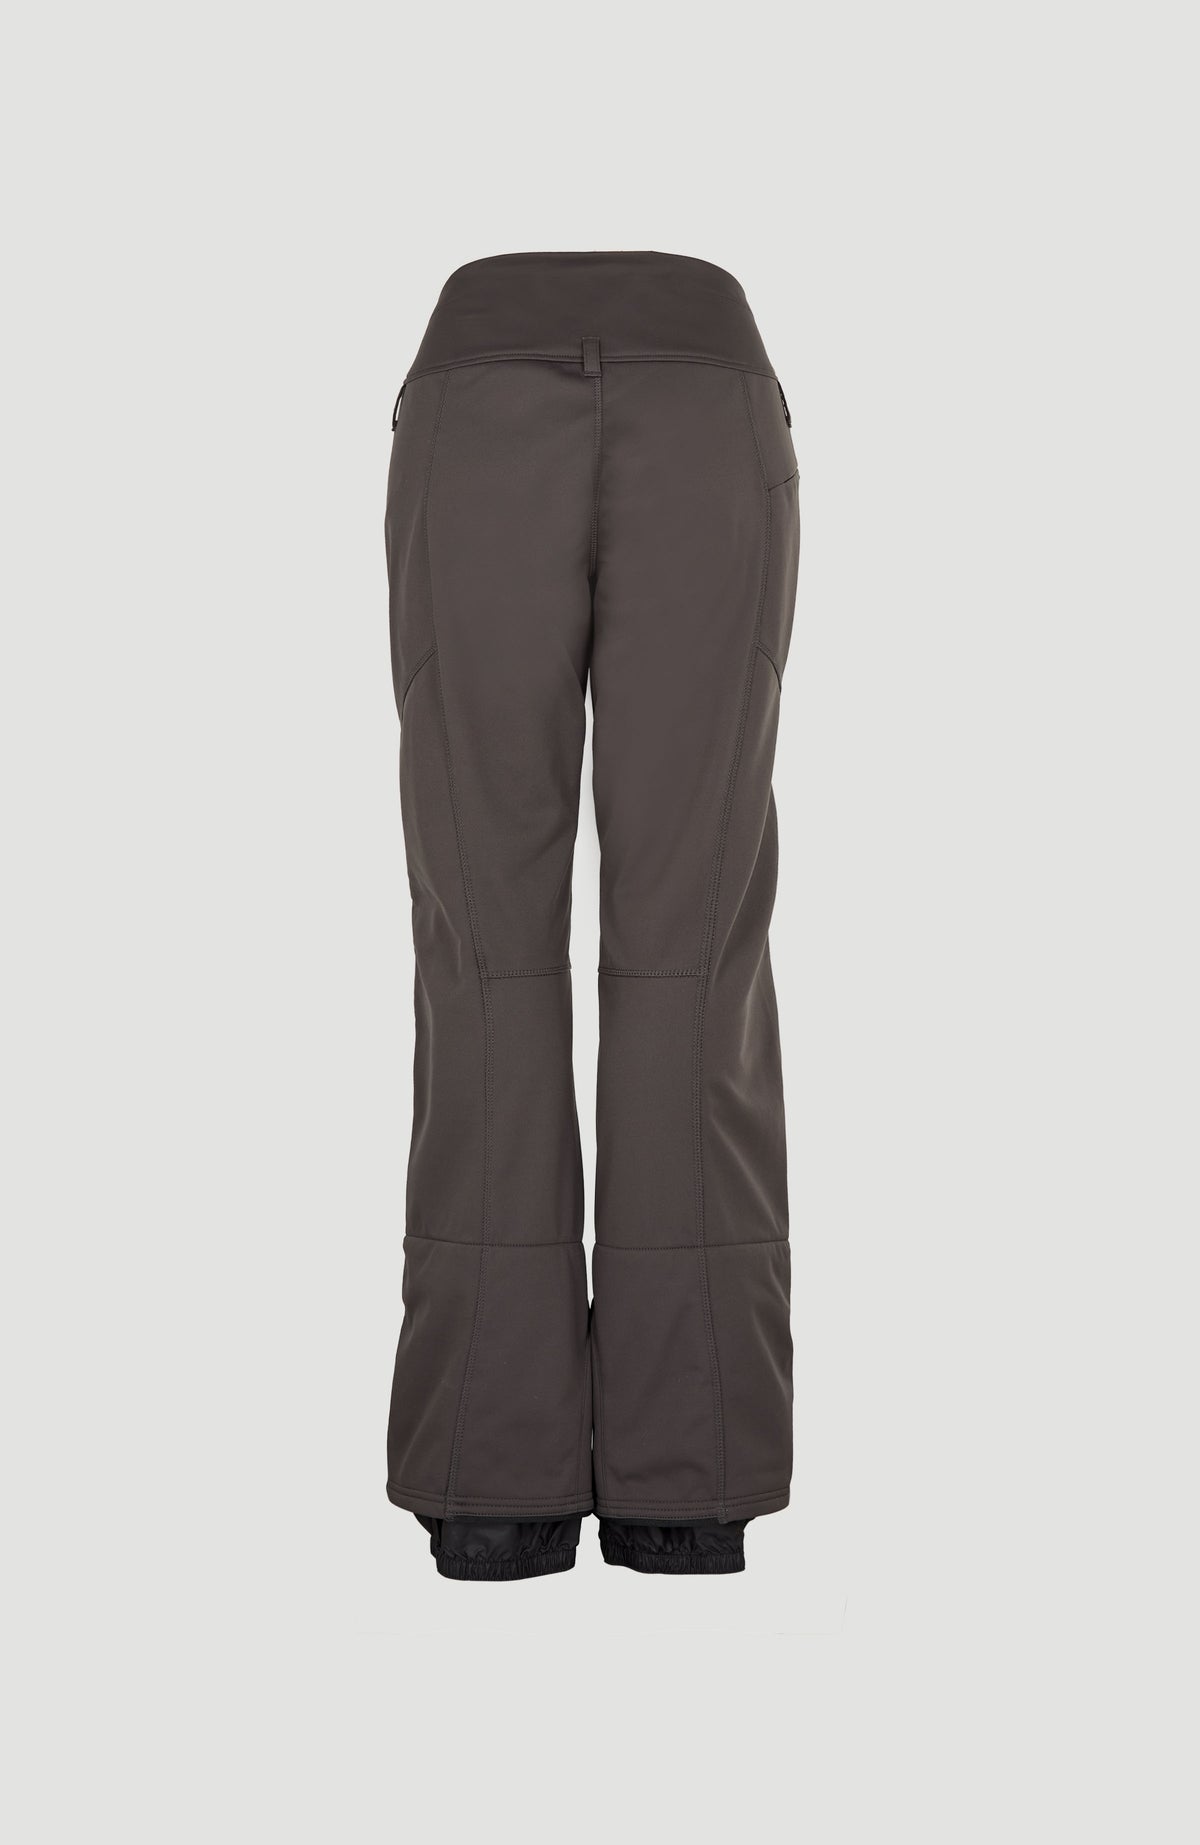 Apex STH Pants - Women's Short Sizes